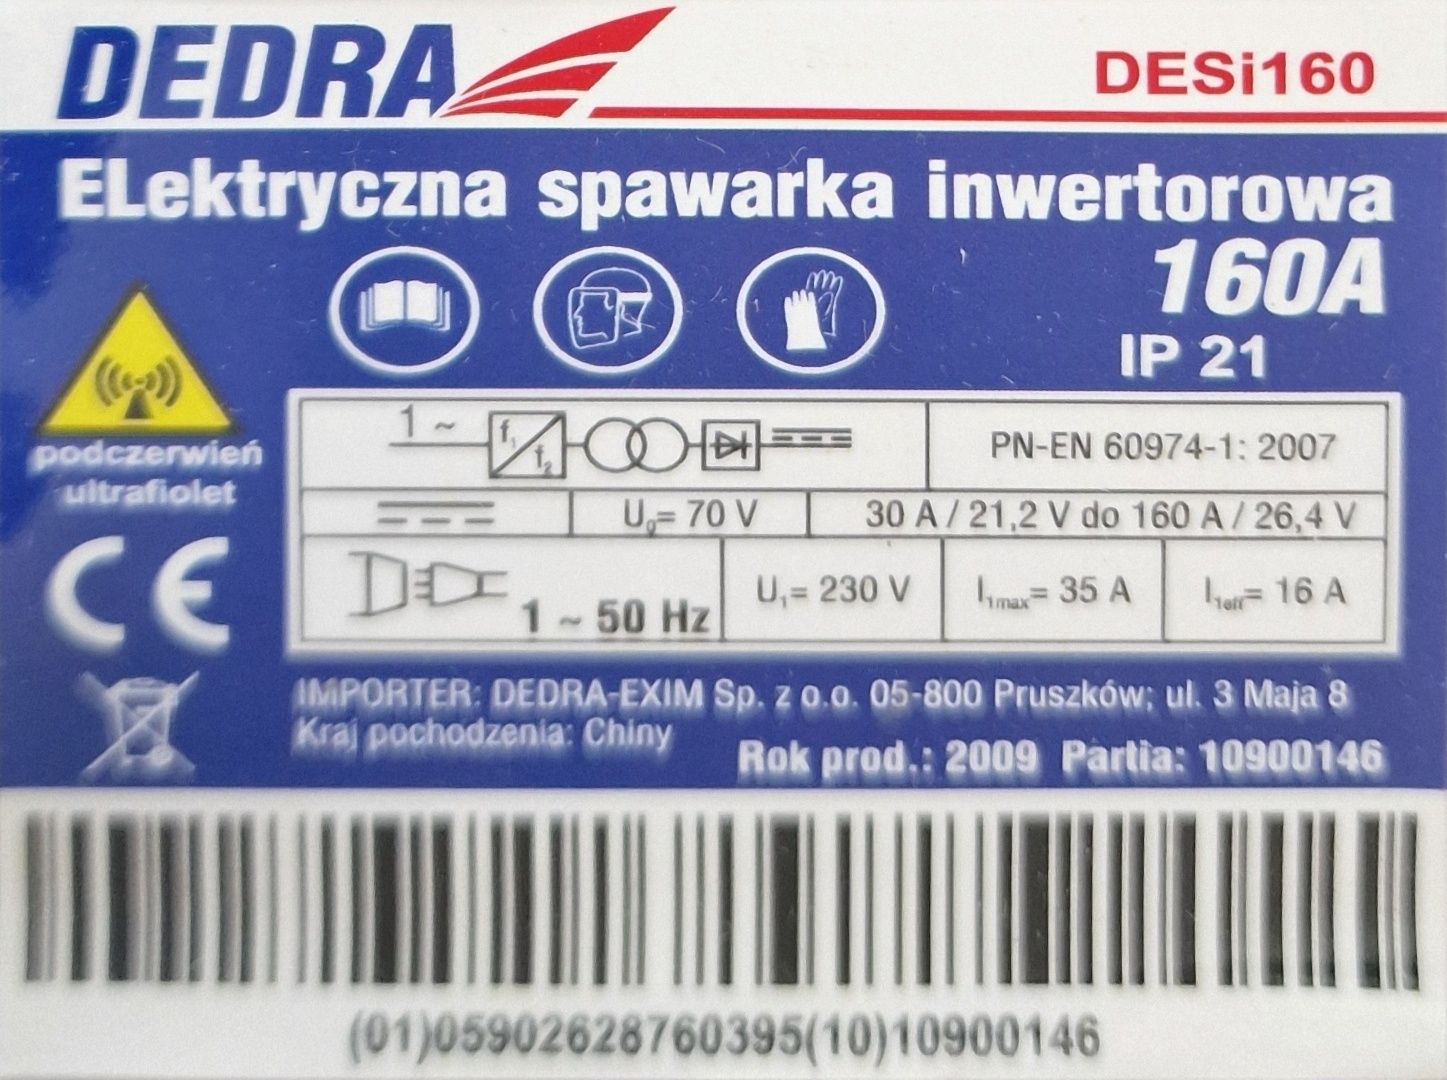 Spawarka inwentorowa DEDRA DESi160 + gratisy.